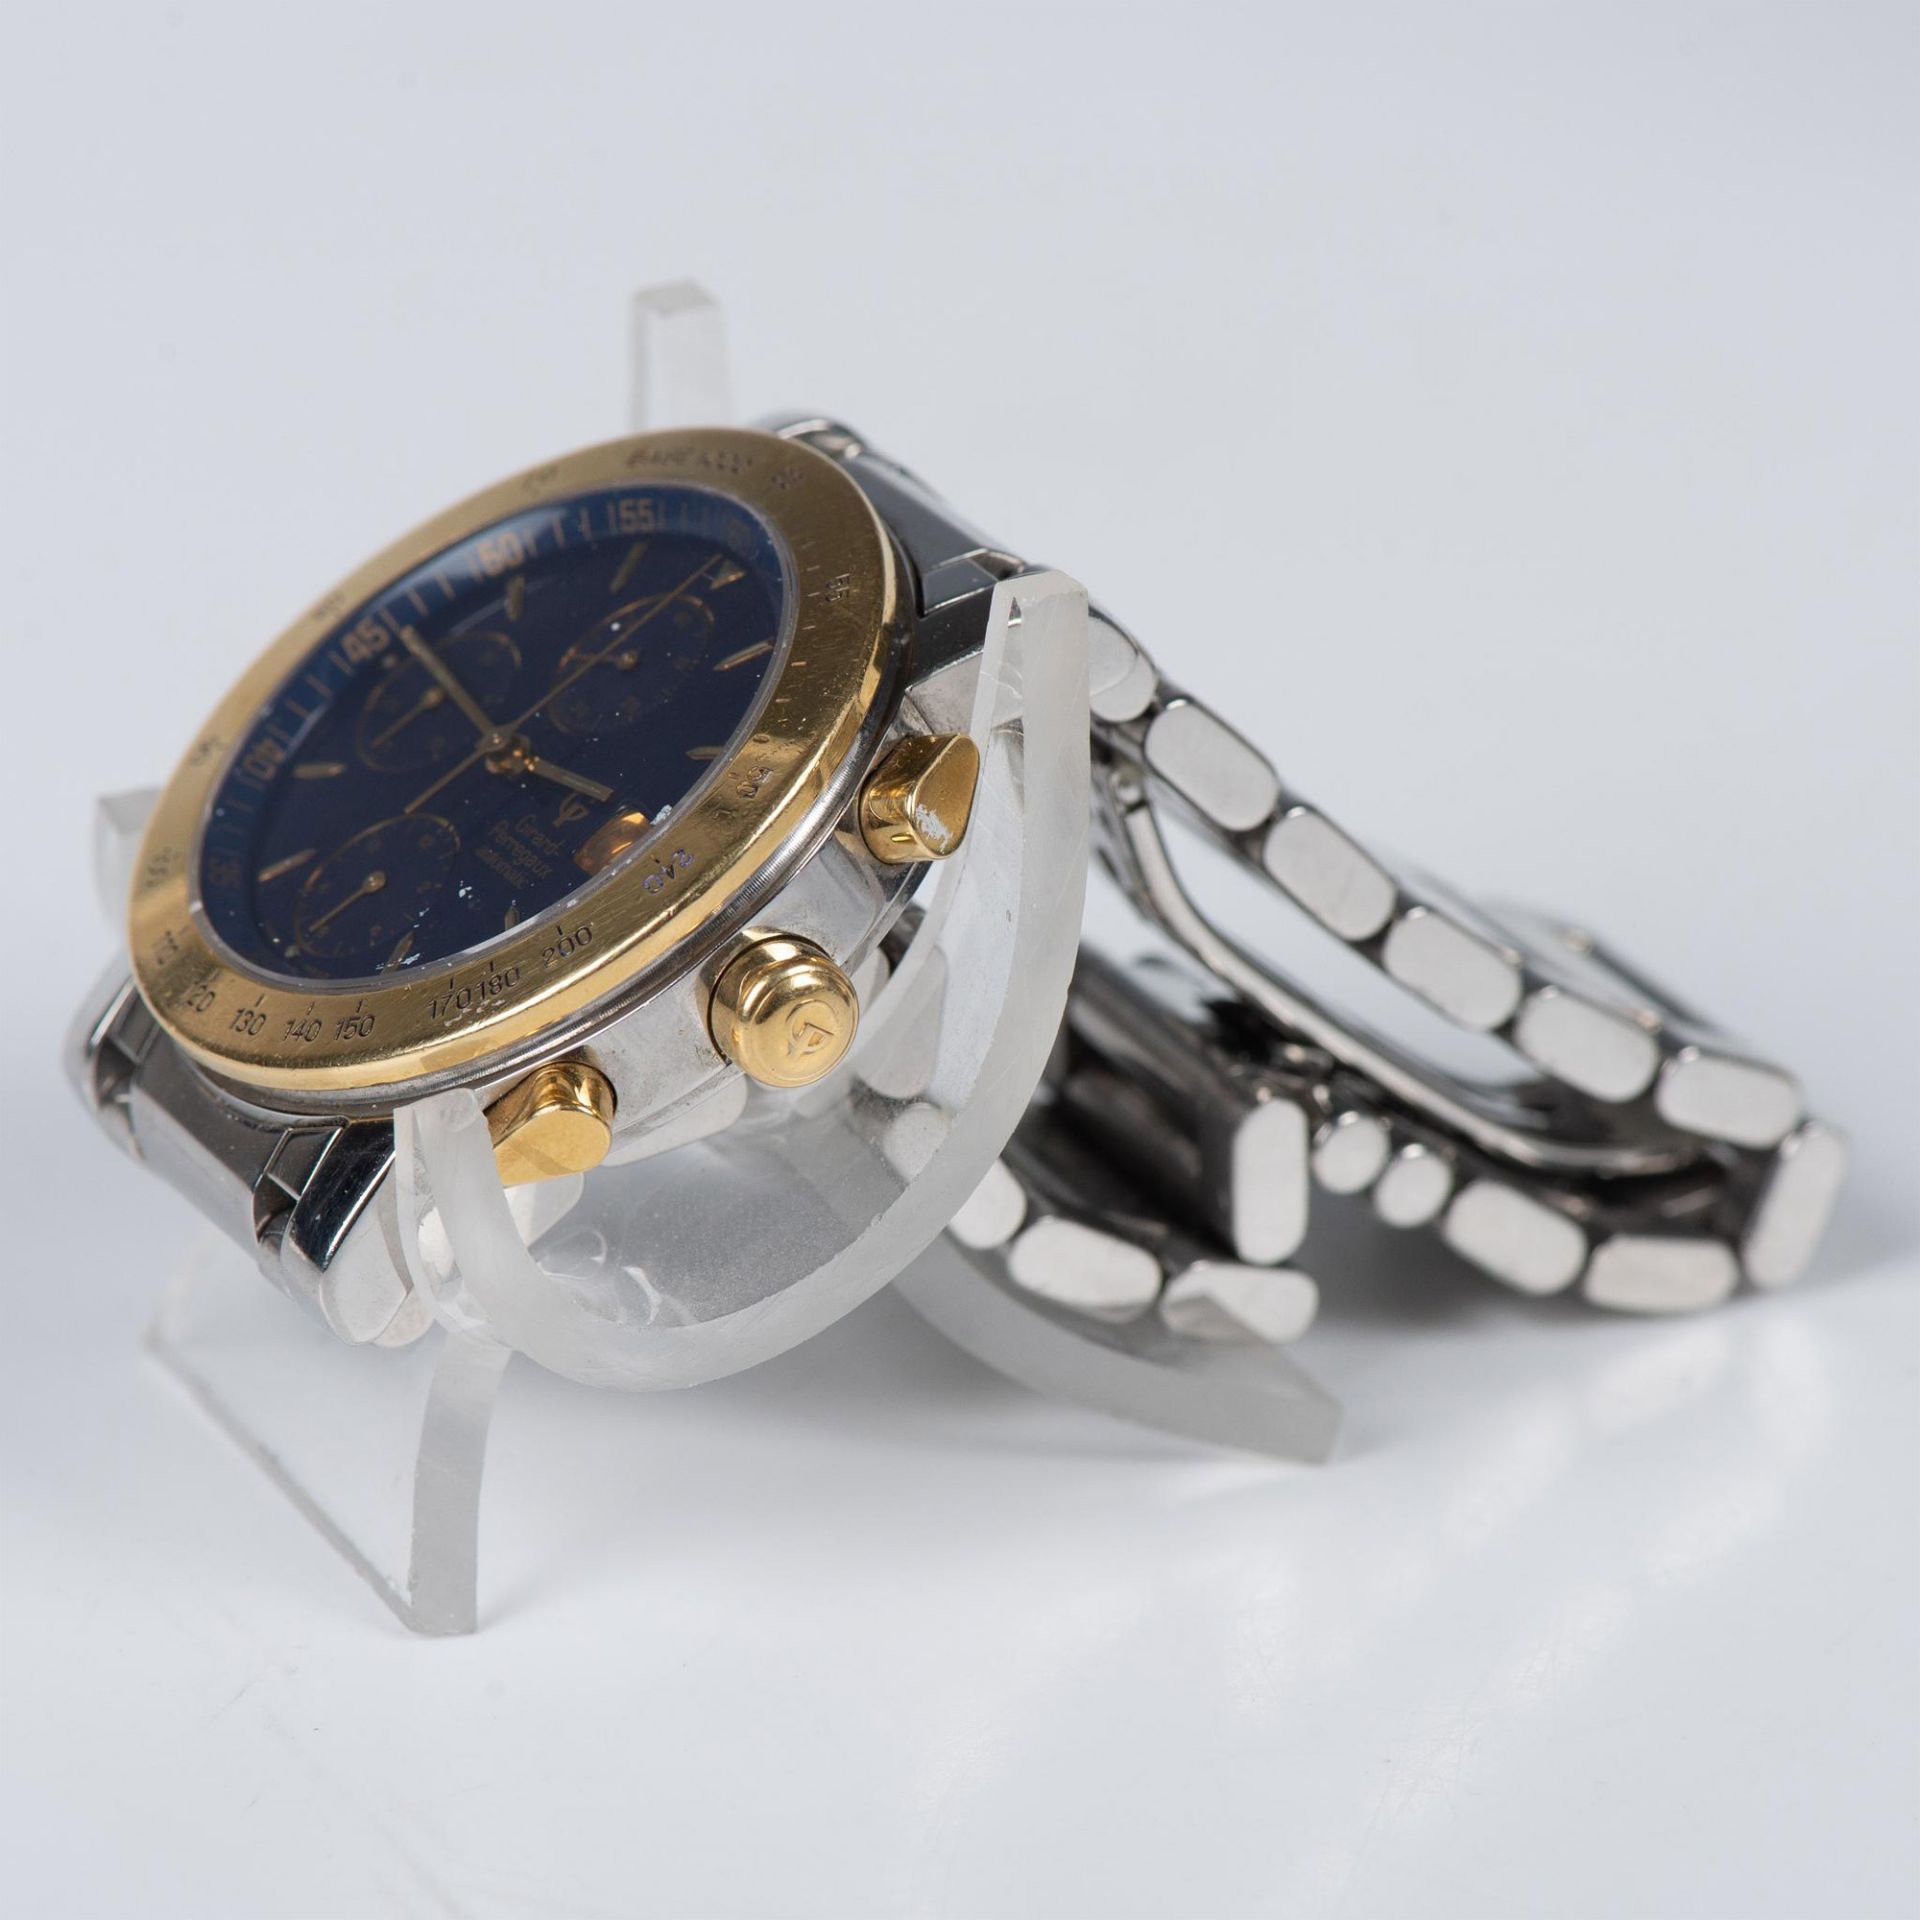 Girard Perregaux 7000 Chrono Automatic Men's Watch - Image 5 of 11